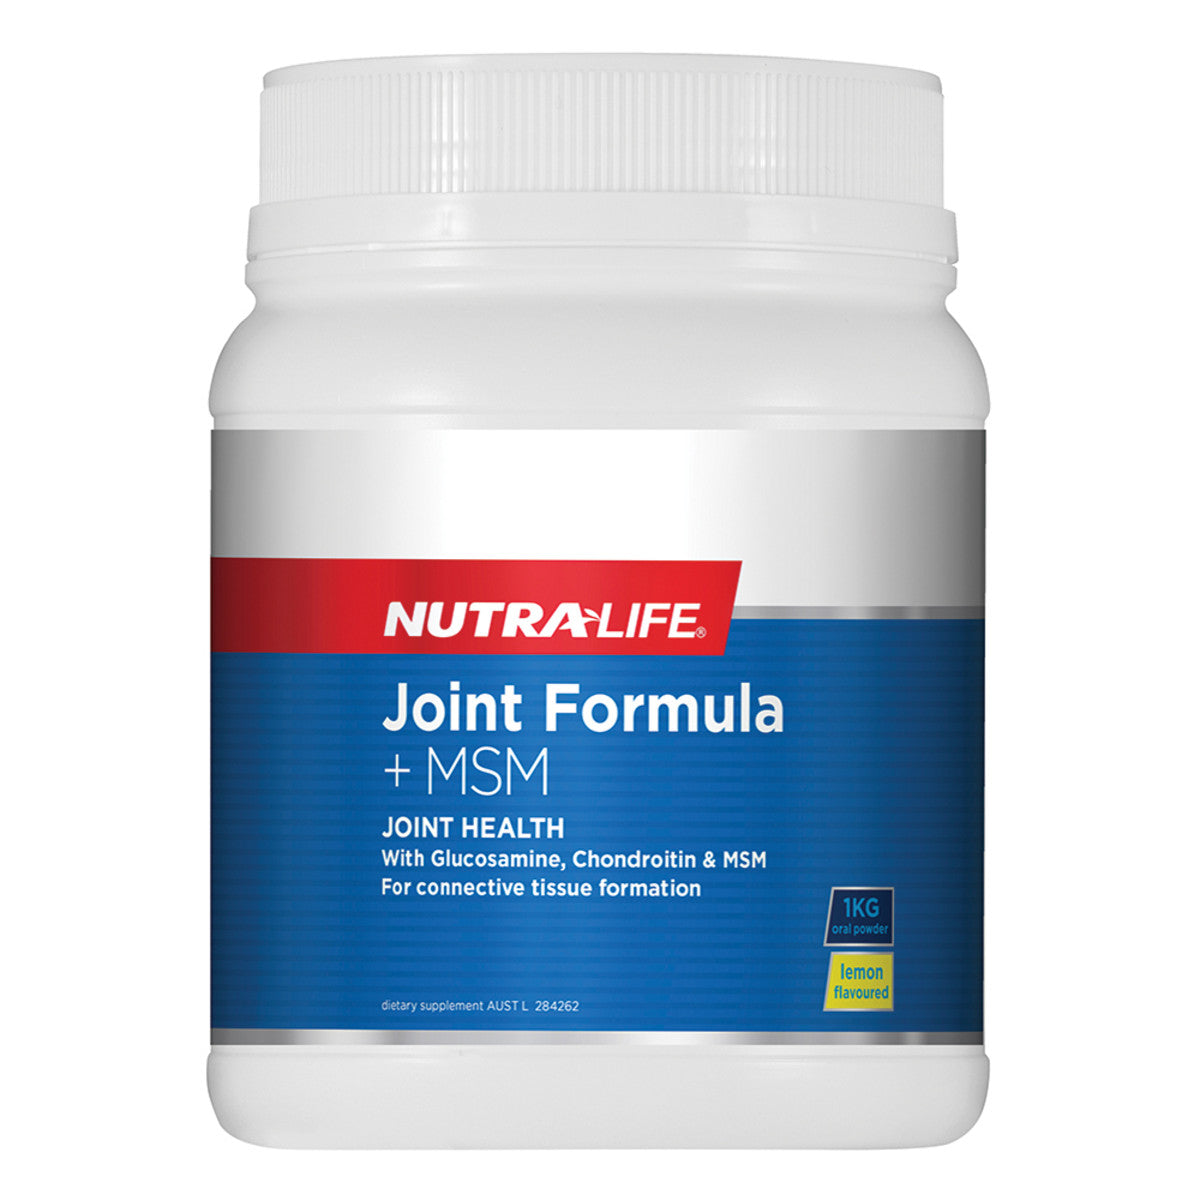 NutraLife - Joint Formula + MSM